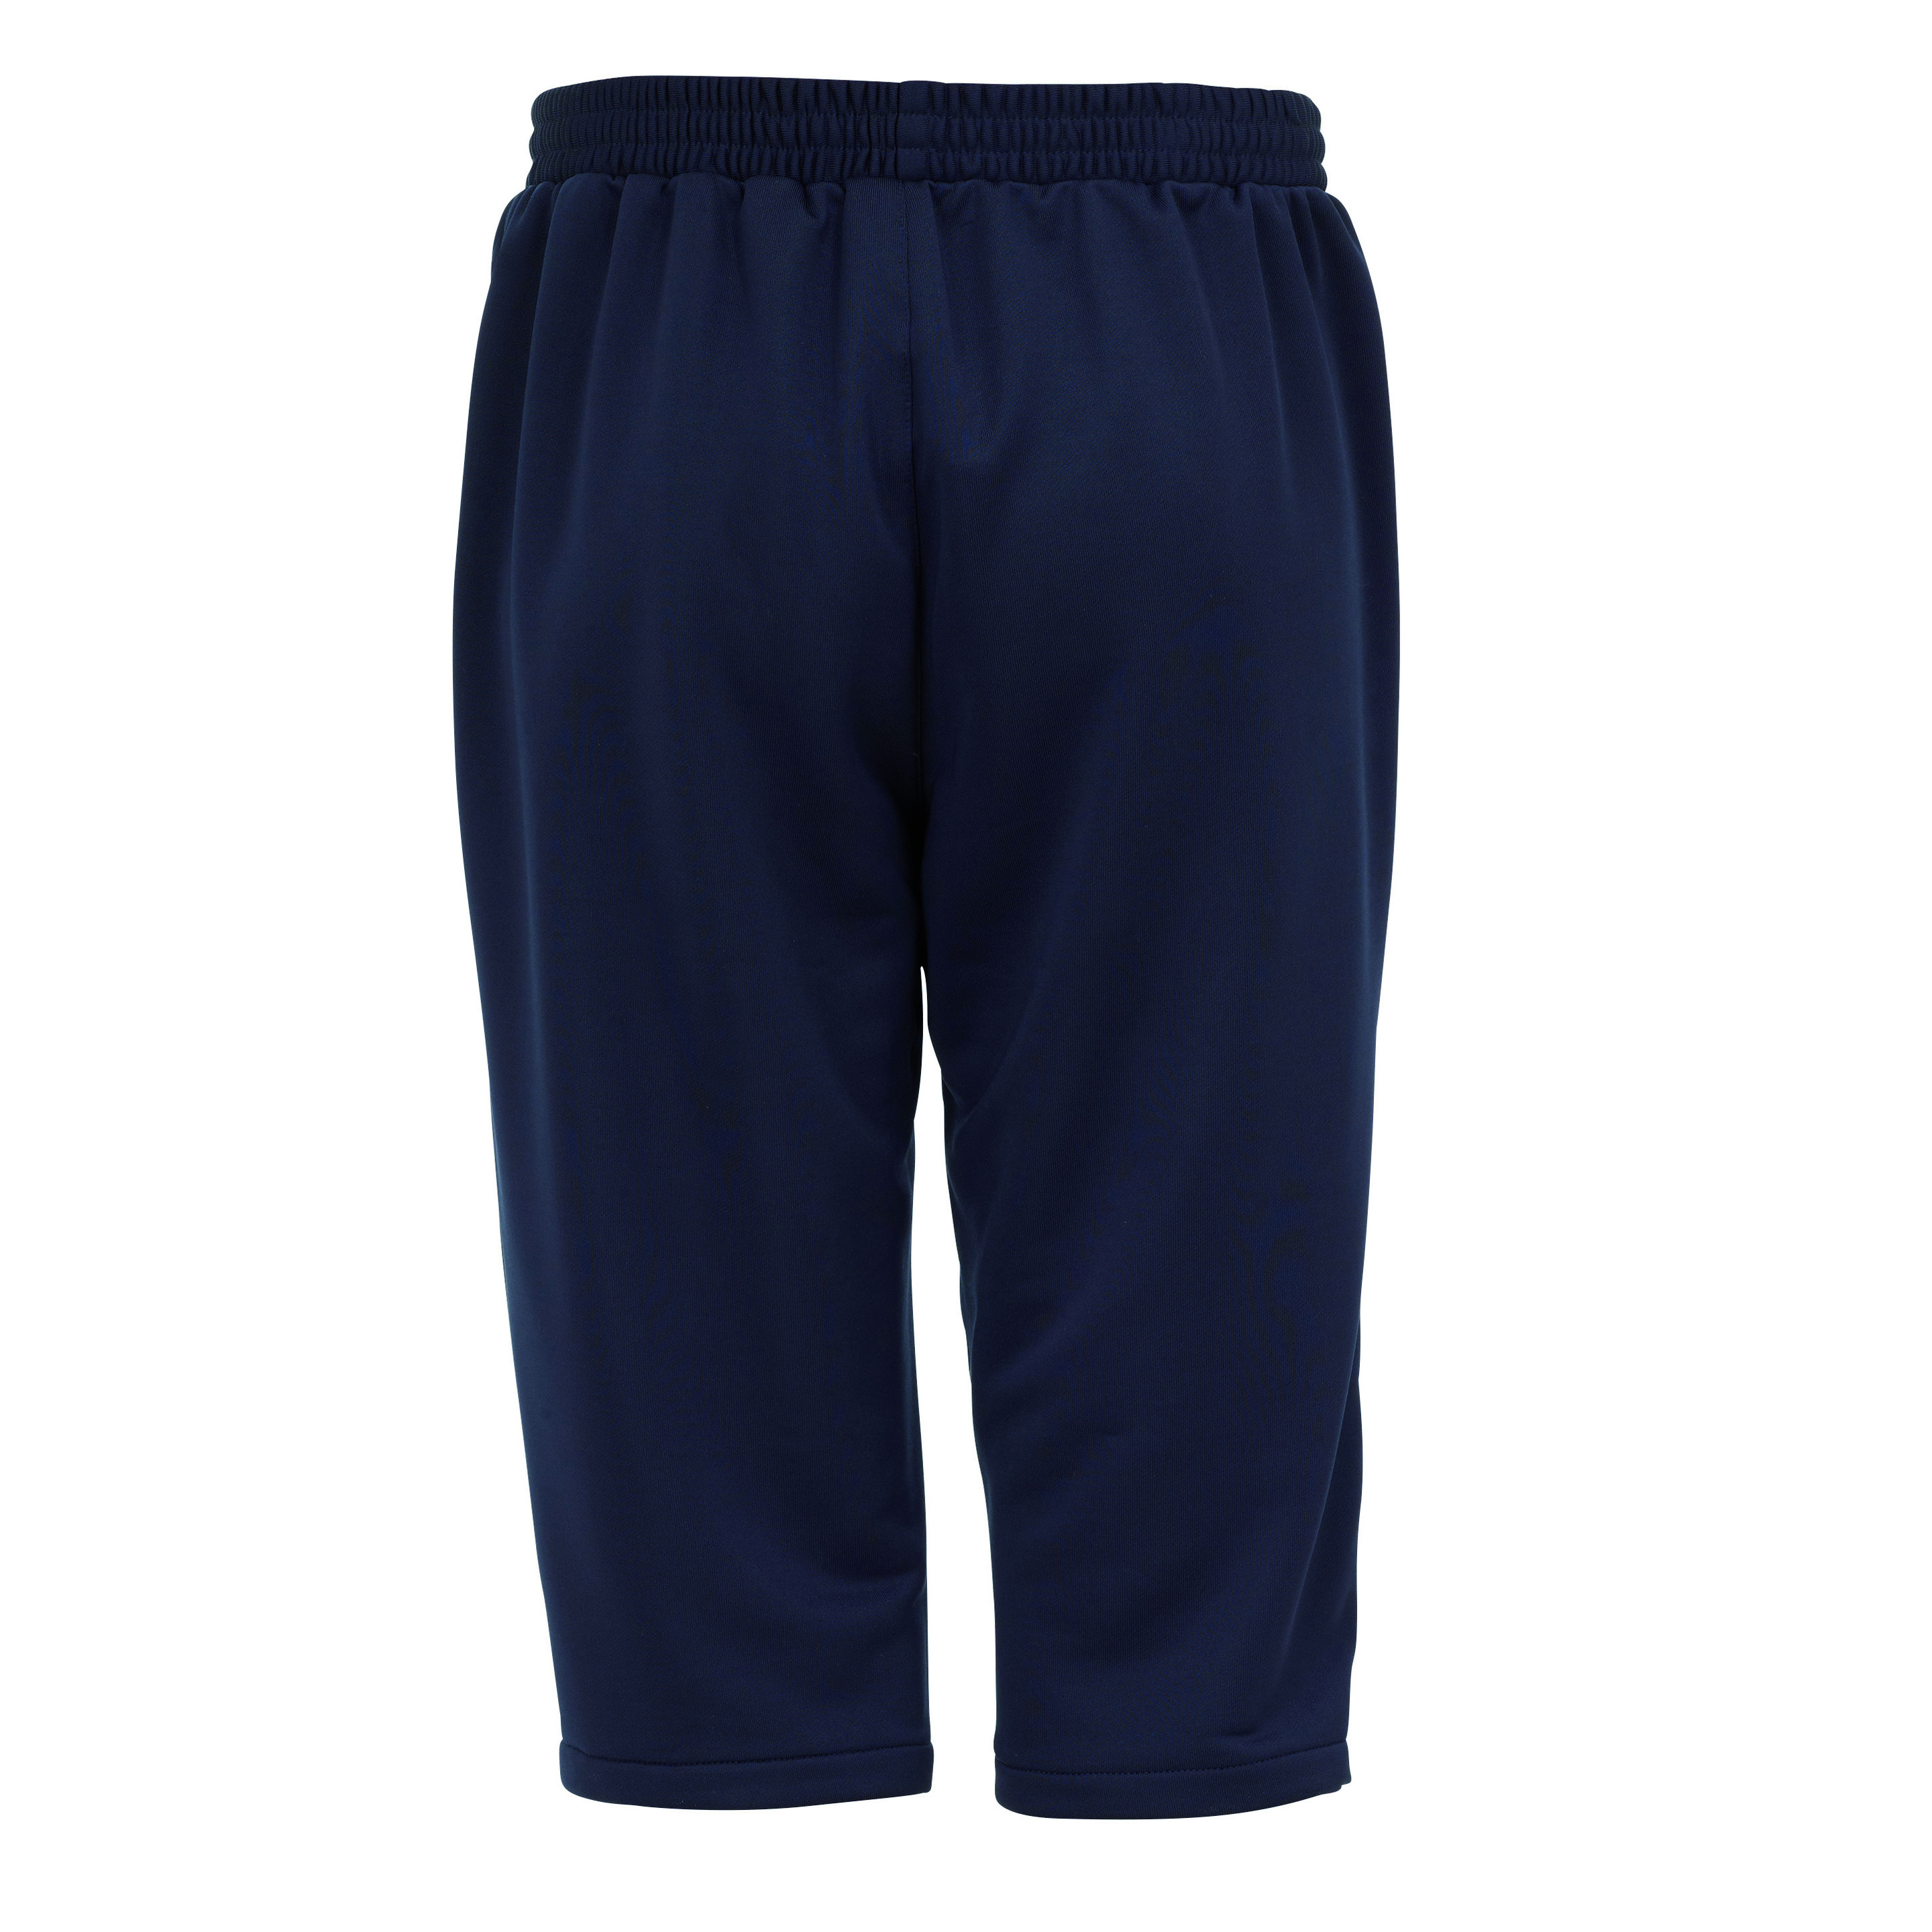 Essential Shorts Largo Azul Marino Uhlsport